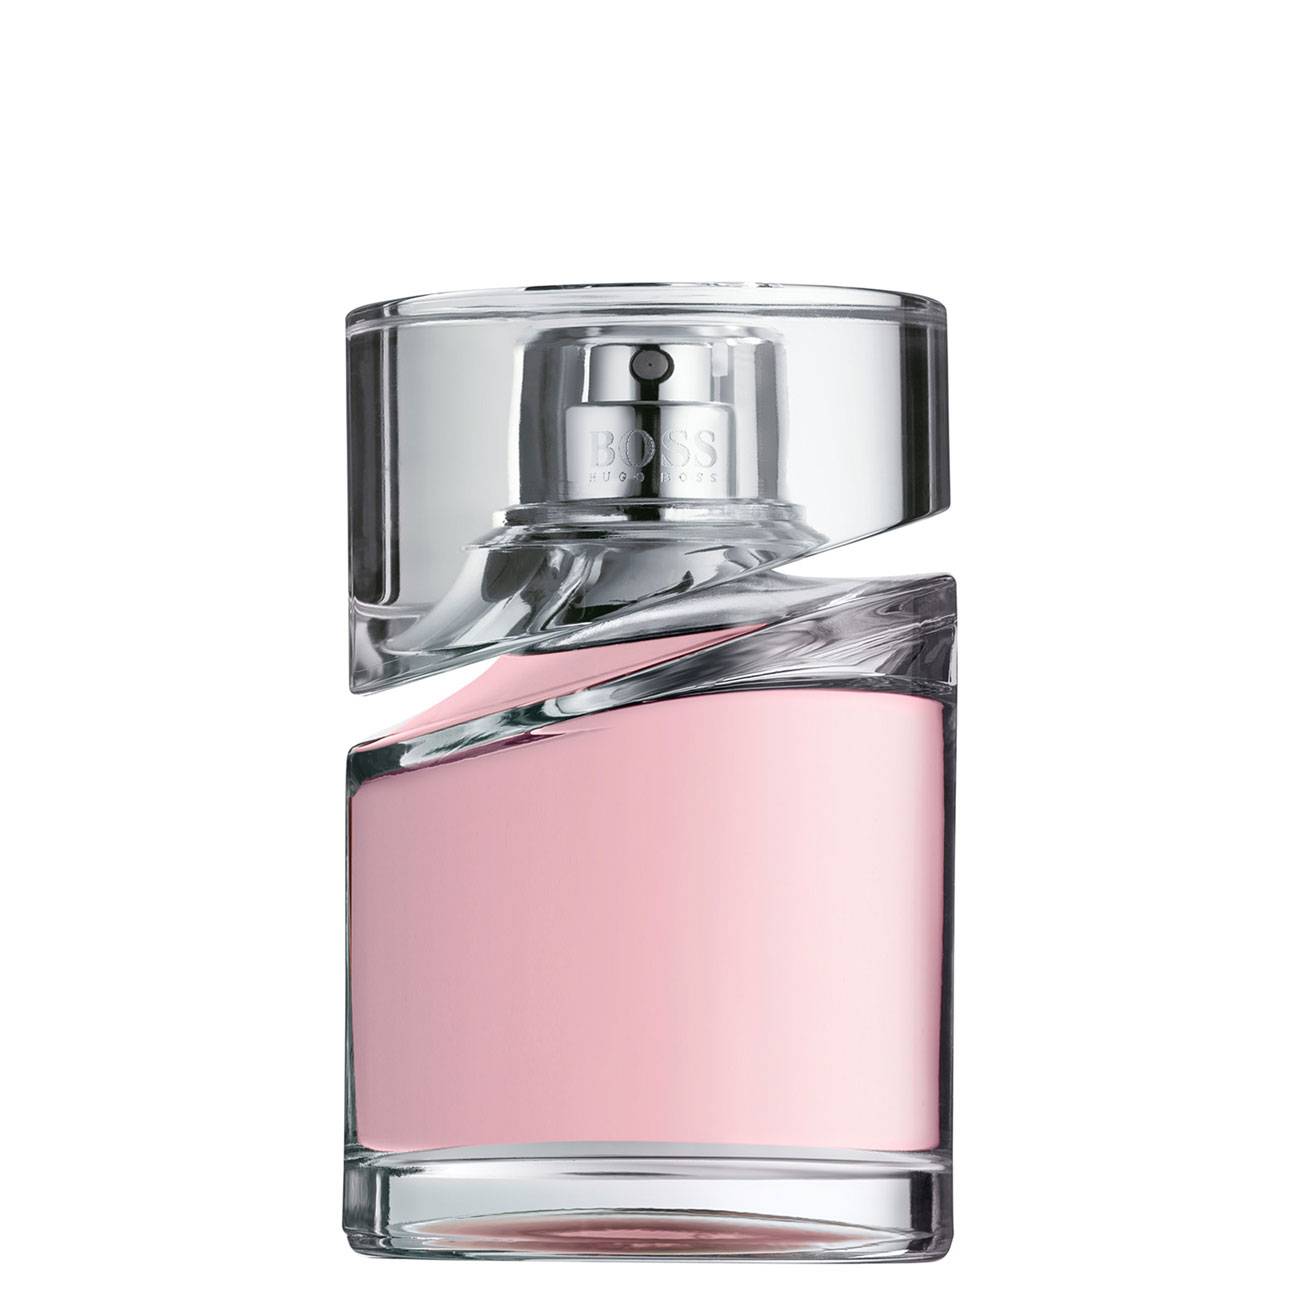 Apa de Parfum Hugo Boss FEMME 75ml cu comanda online